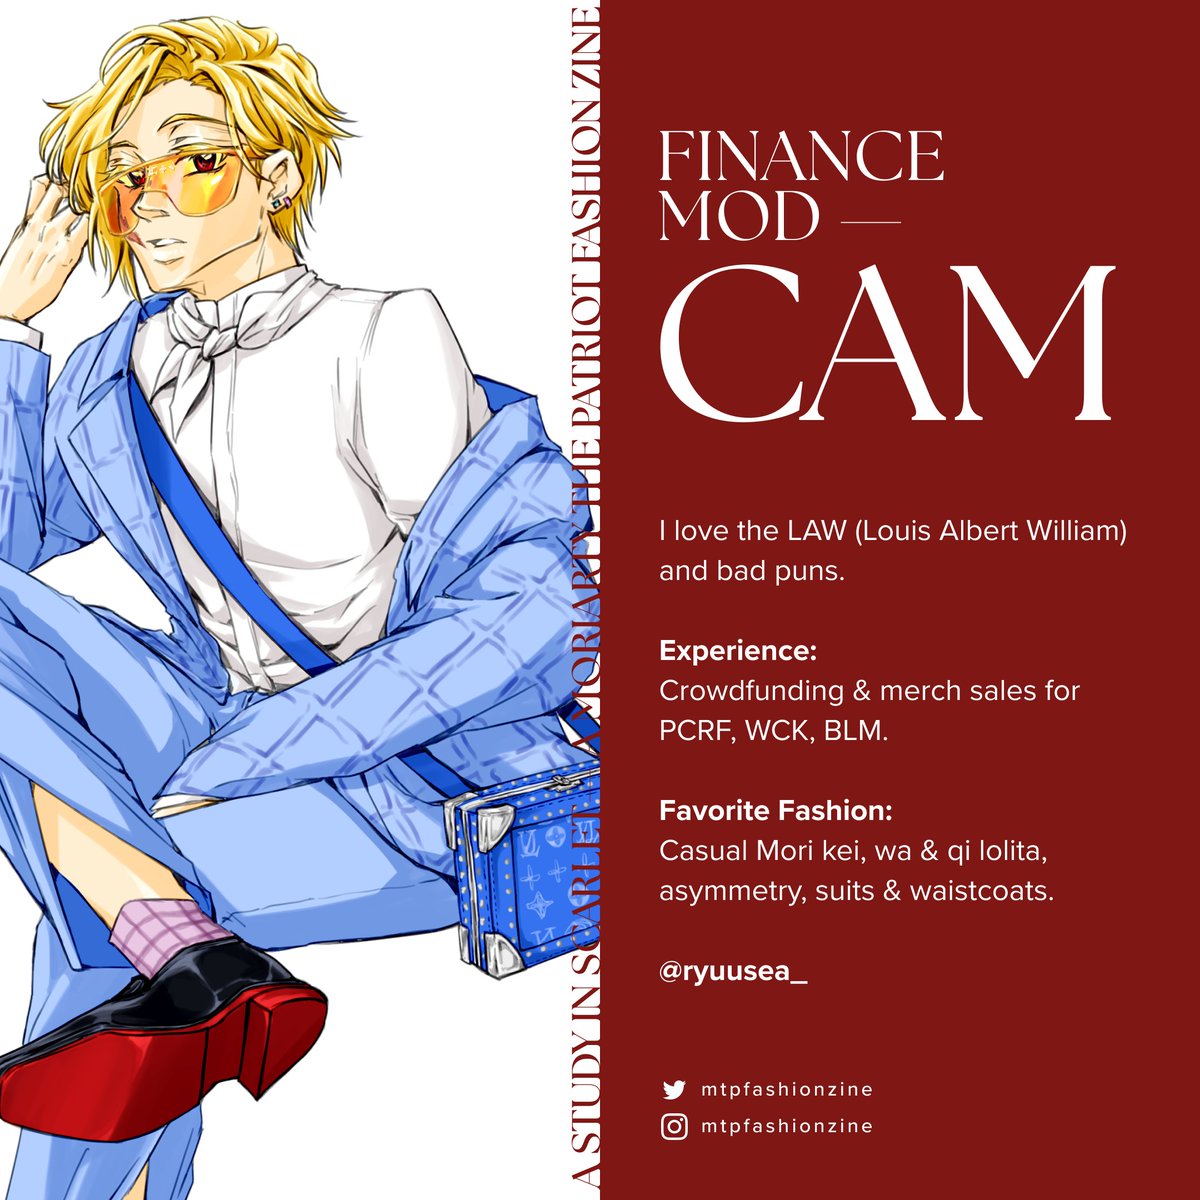 Meet the Finance Mod, Cam @ryuusea_